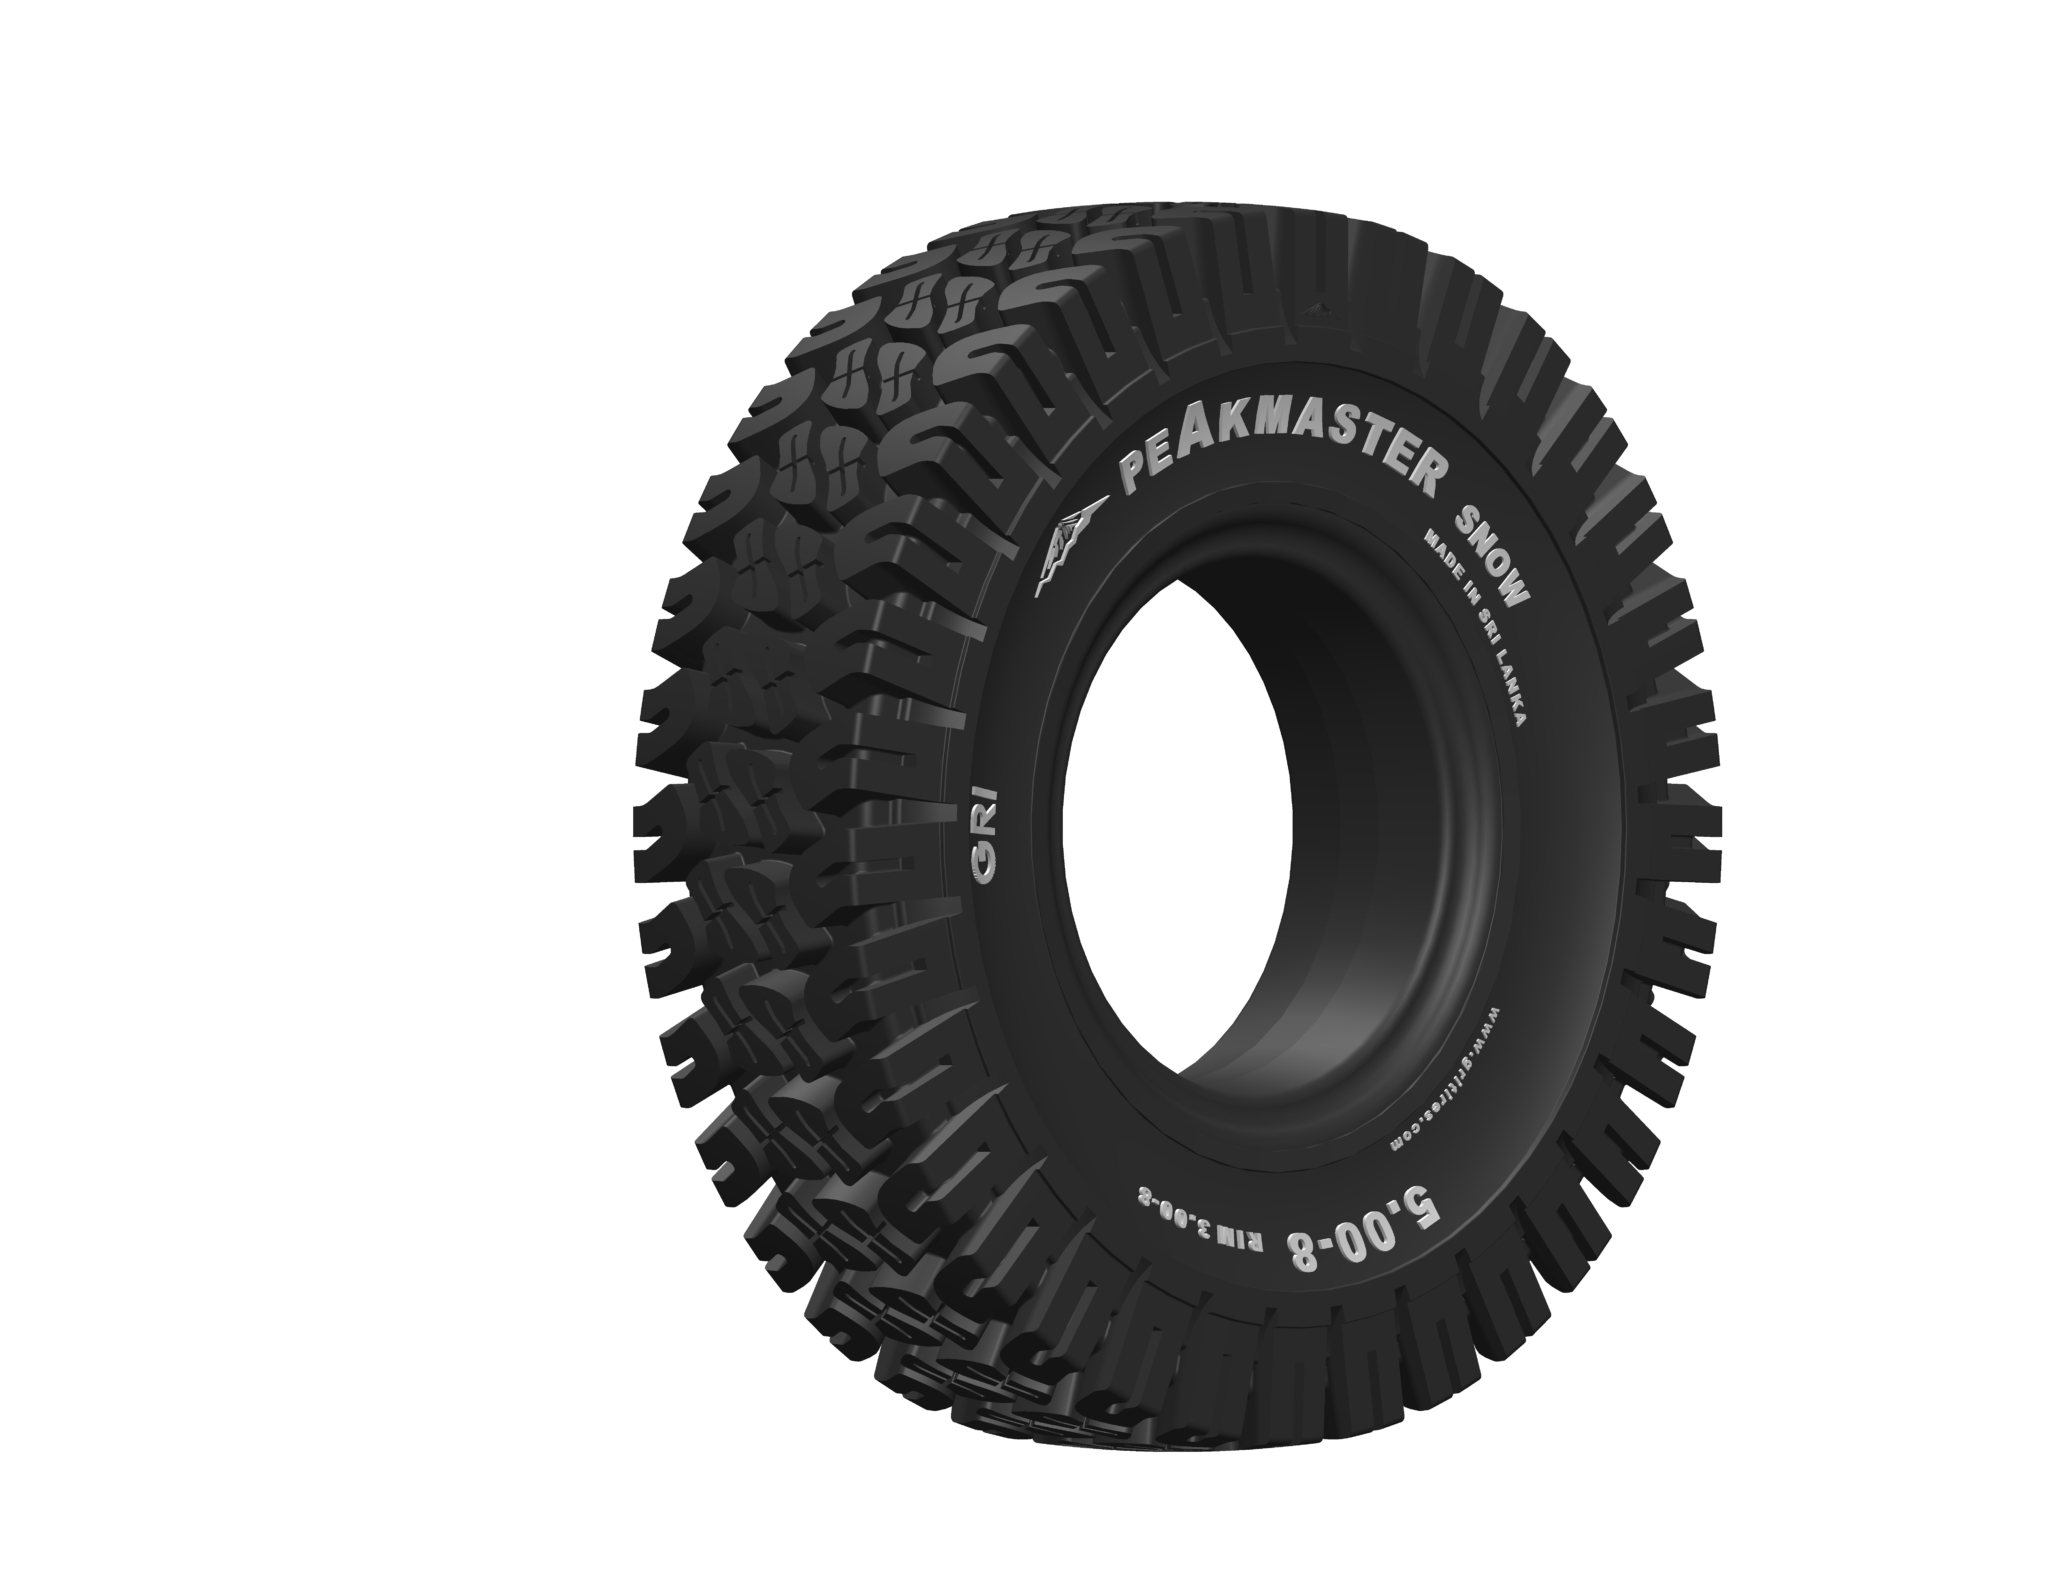 GRI Peakmaster Snow tyre offers winter material handling performance